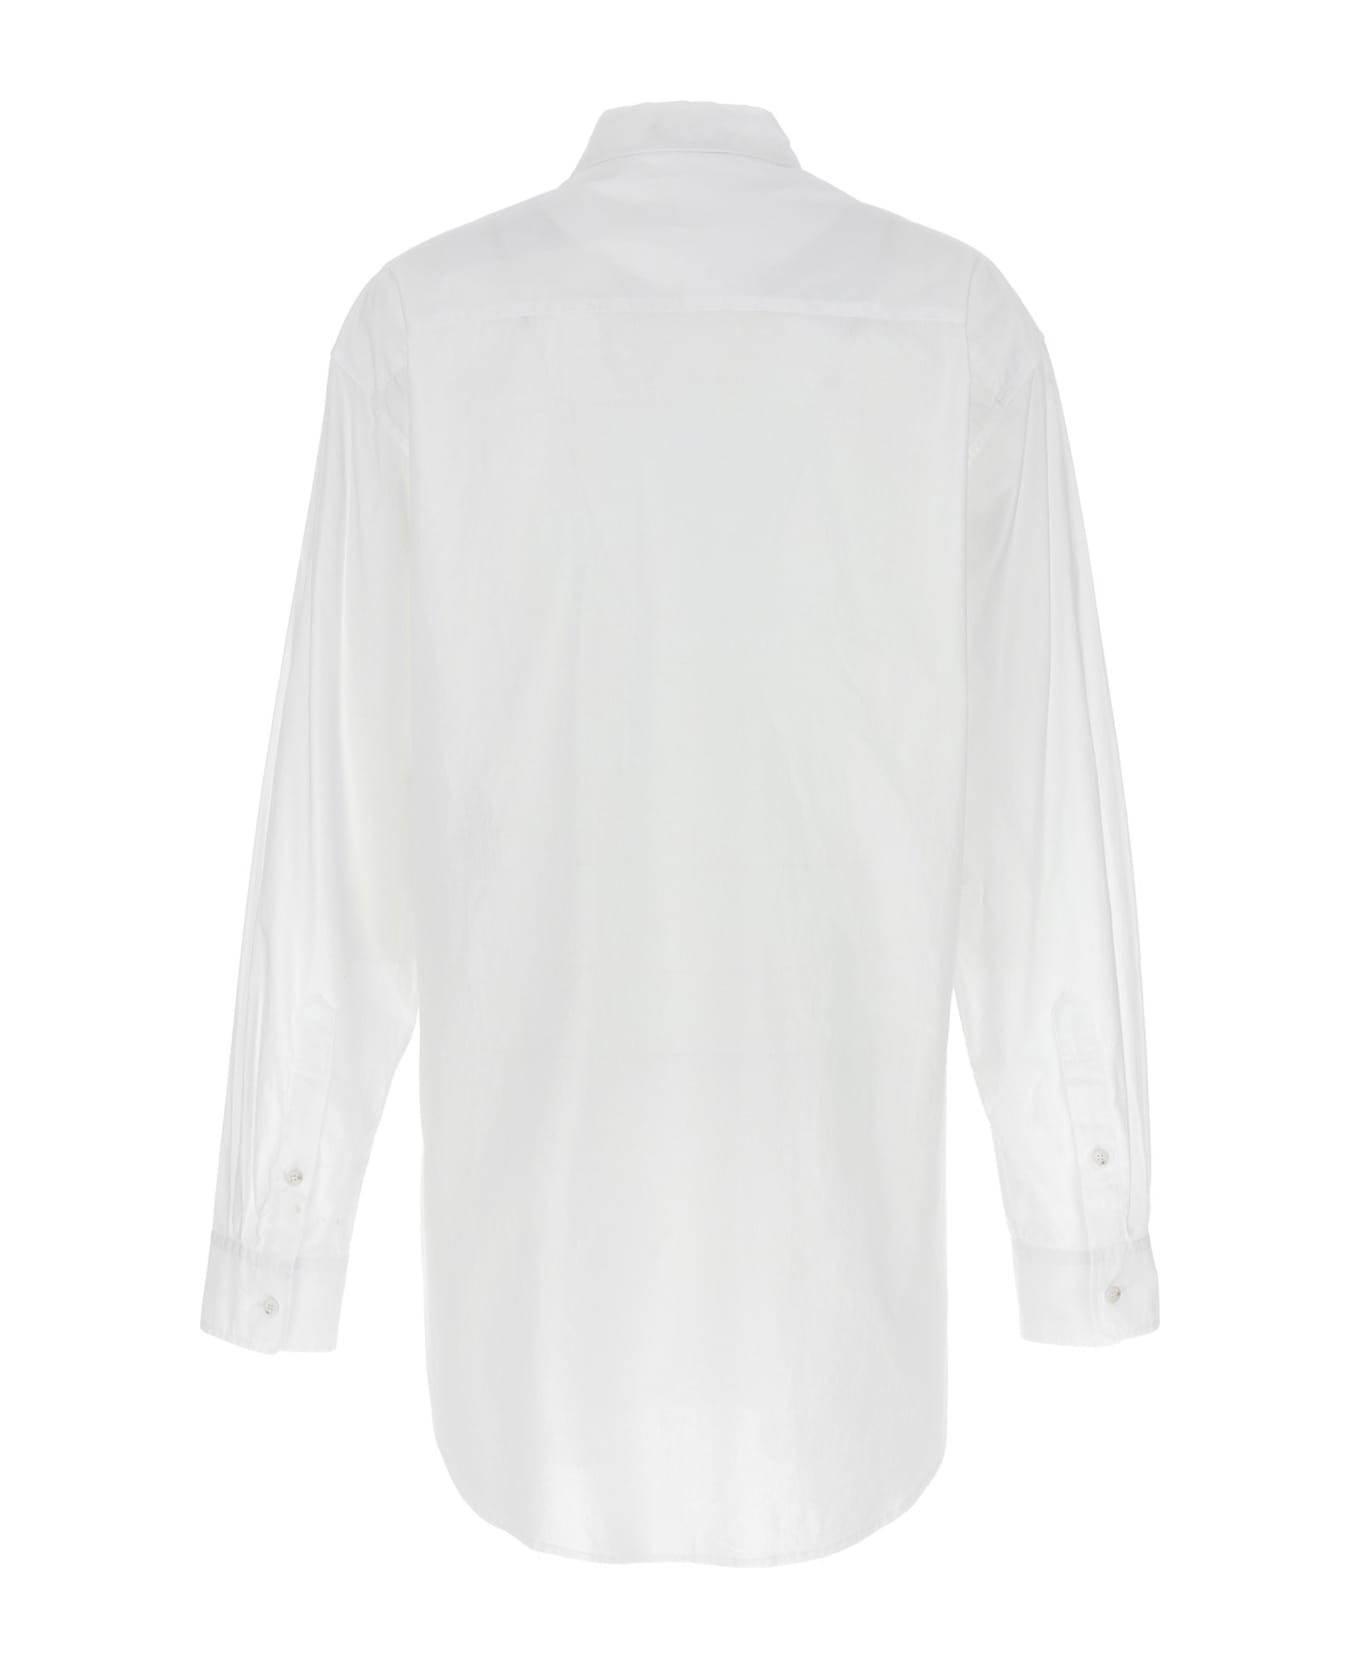 Ann Demeulemeester 'elisabeth' Shirt - White